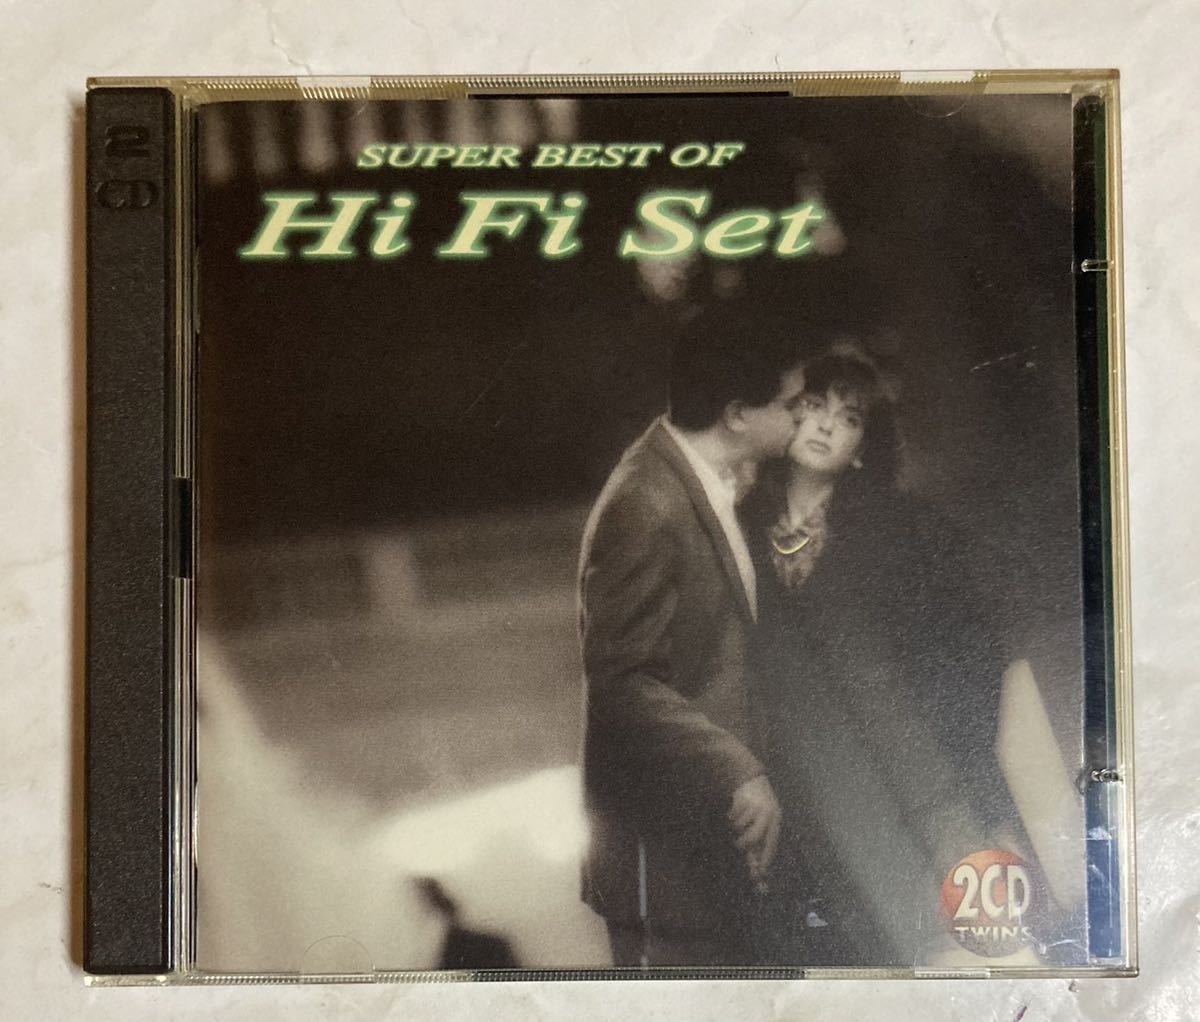 2CD Hi-Fi SET TWINS SUPER BEST OF HI-FI SET ハイ・ファイ・セット ベスト ALCA-5192_画像1